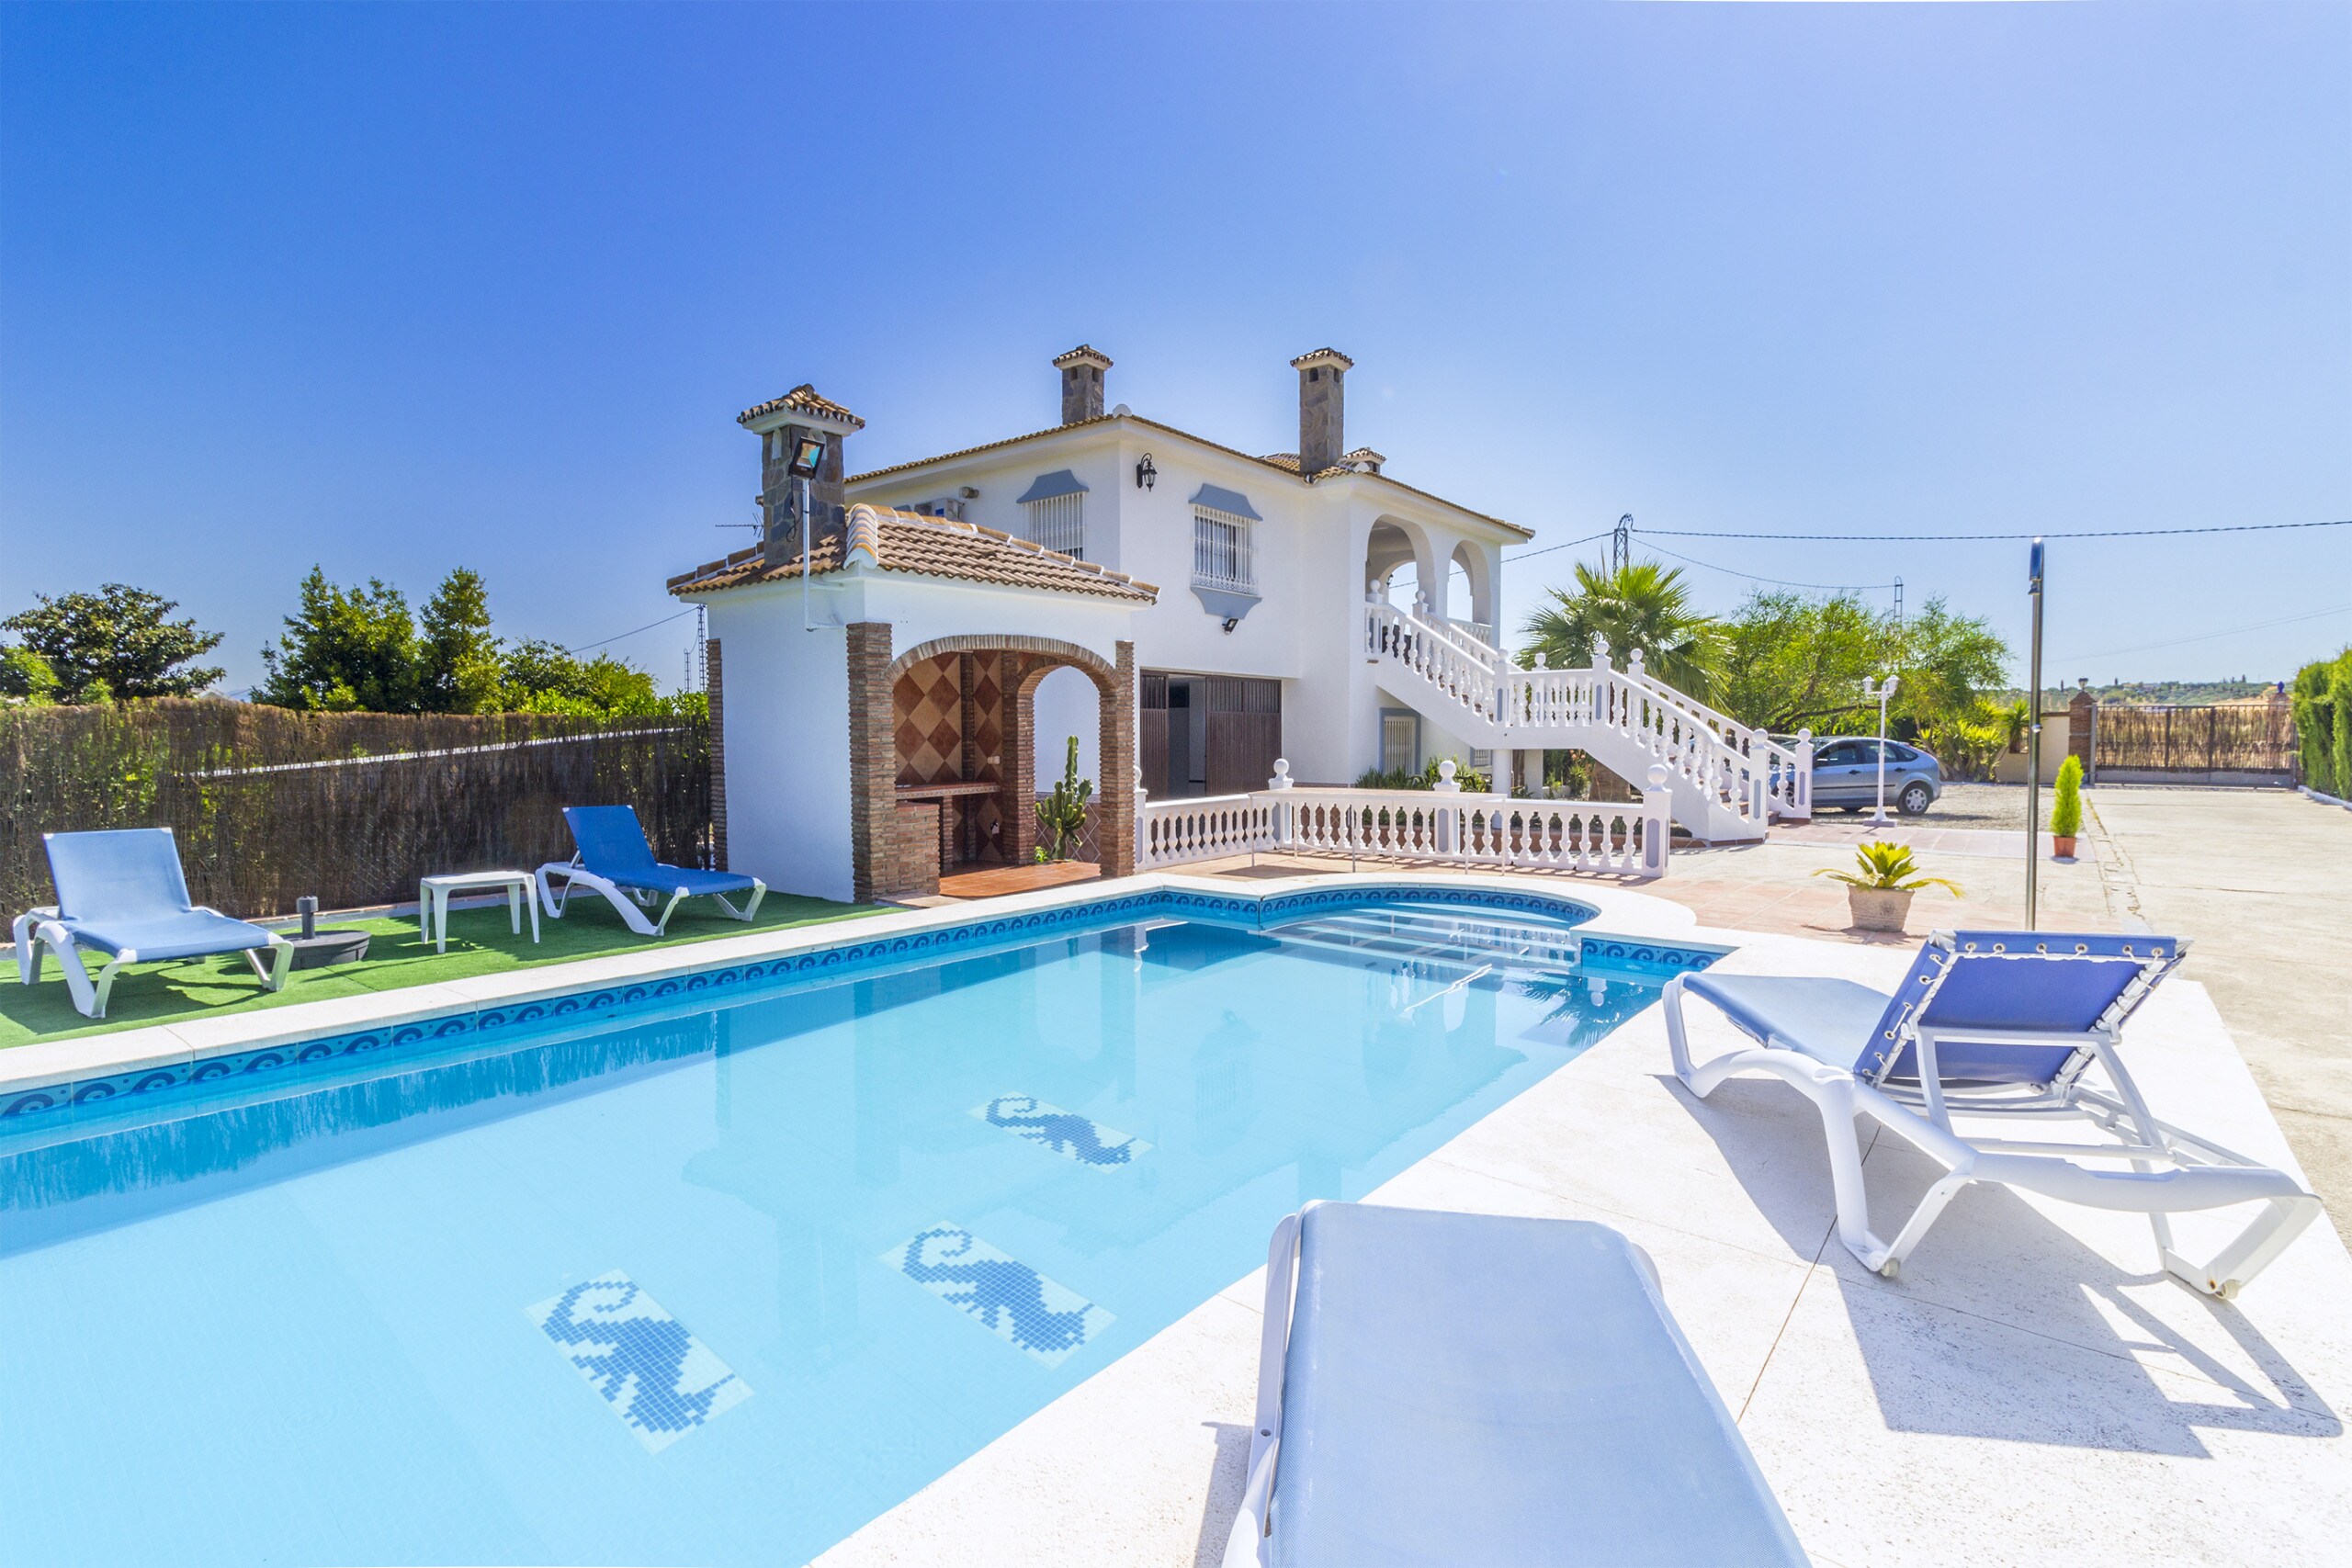 Enjoy the private pool of this luxury estate in Alhaurín el Grande